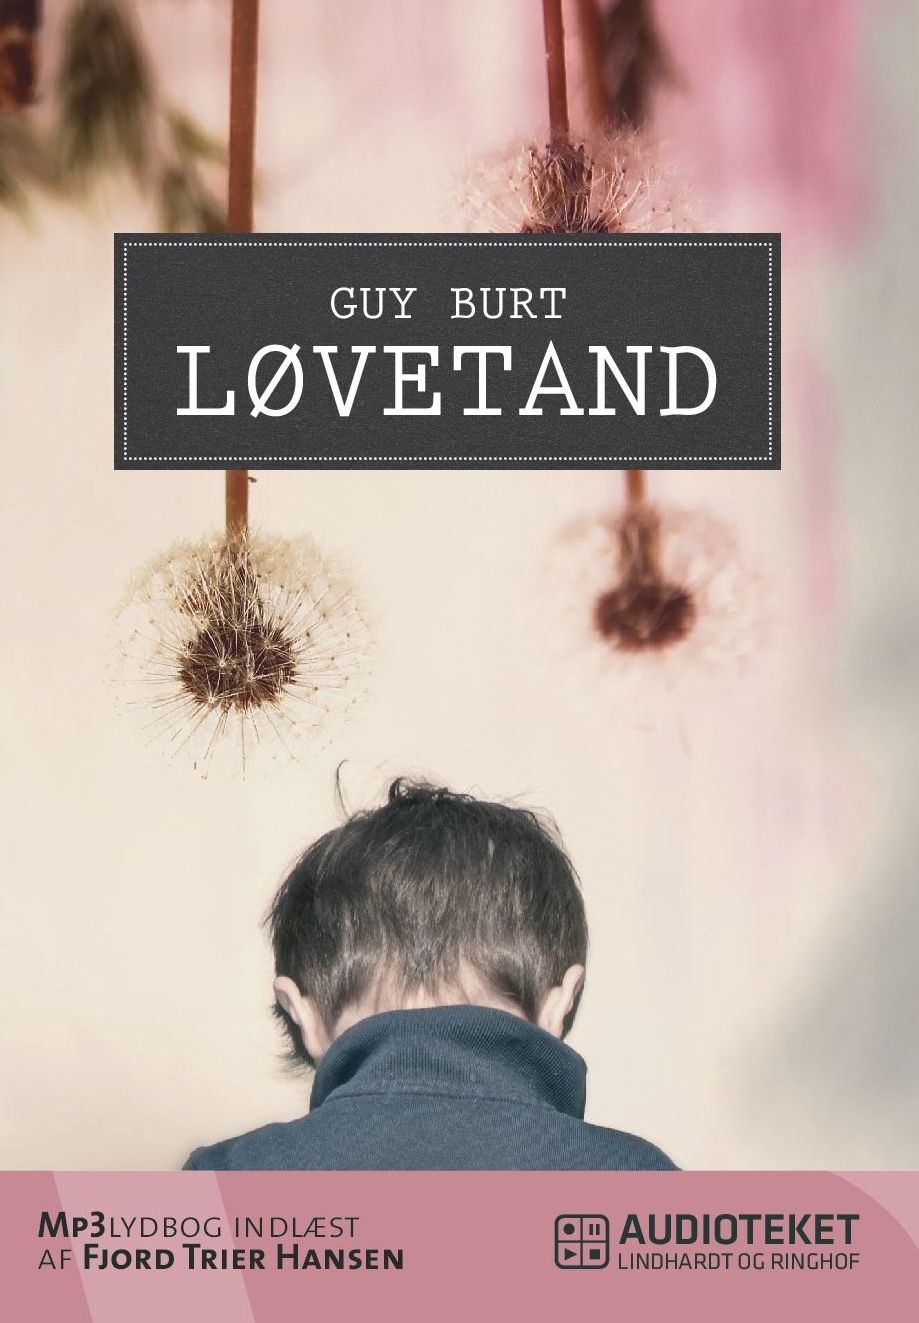 Løvetand, audiobook by Guy Burt